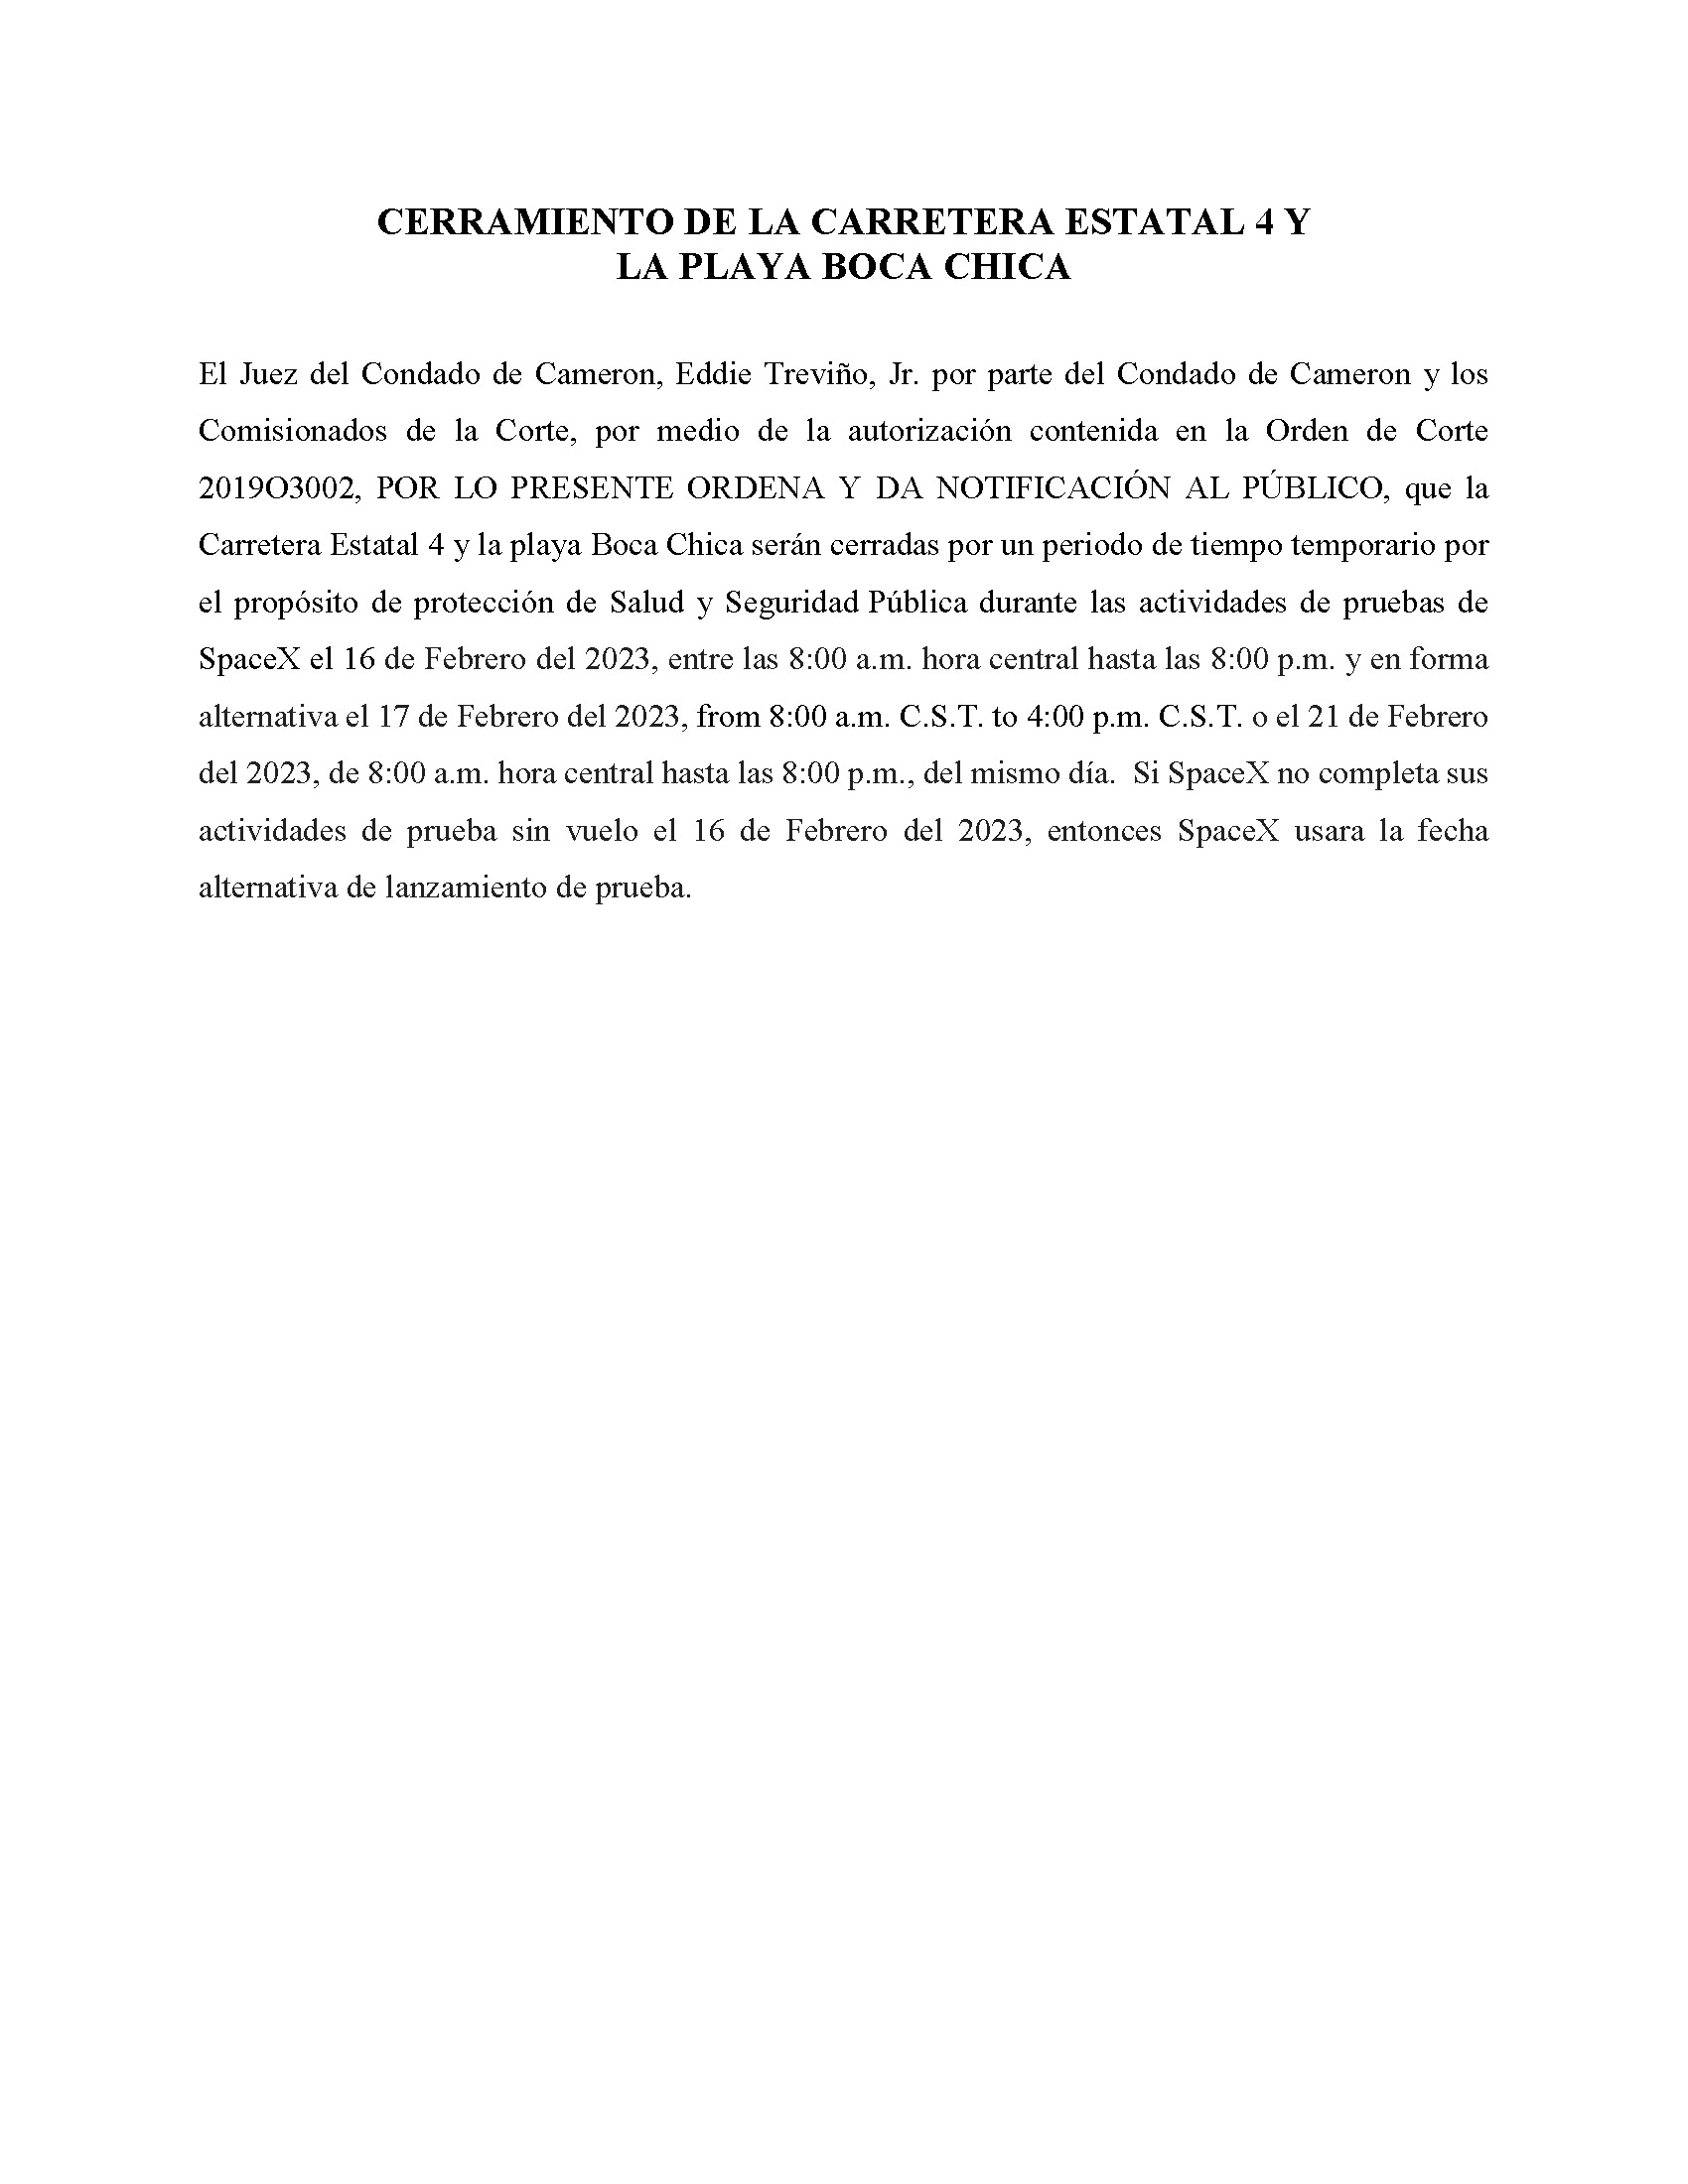 ORDER.CLOSURE OF HIGHWAY 4 Y LA PLAYA BOCA CHICA.SPANISH.02.16.23